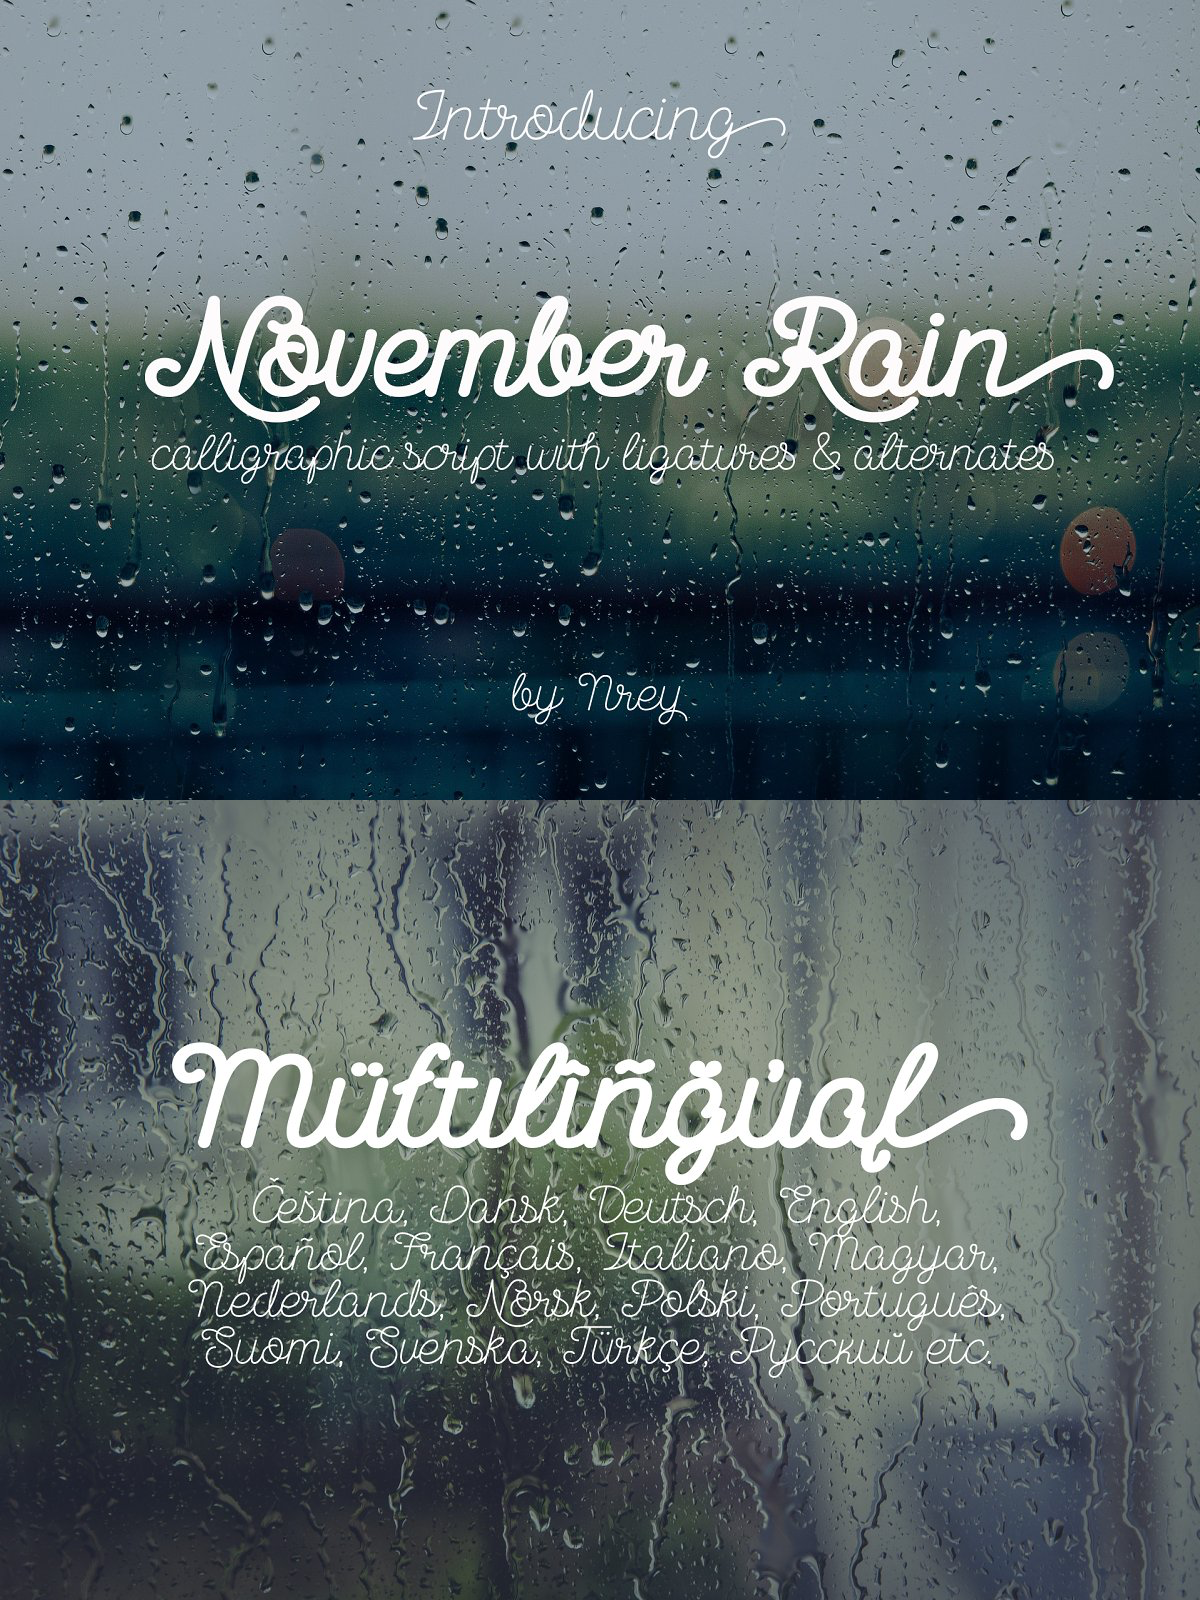 November rain pinterest image preview.